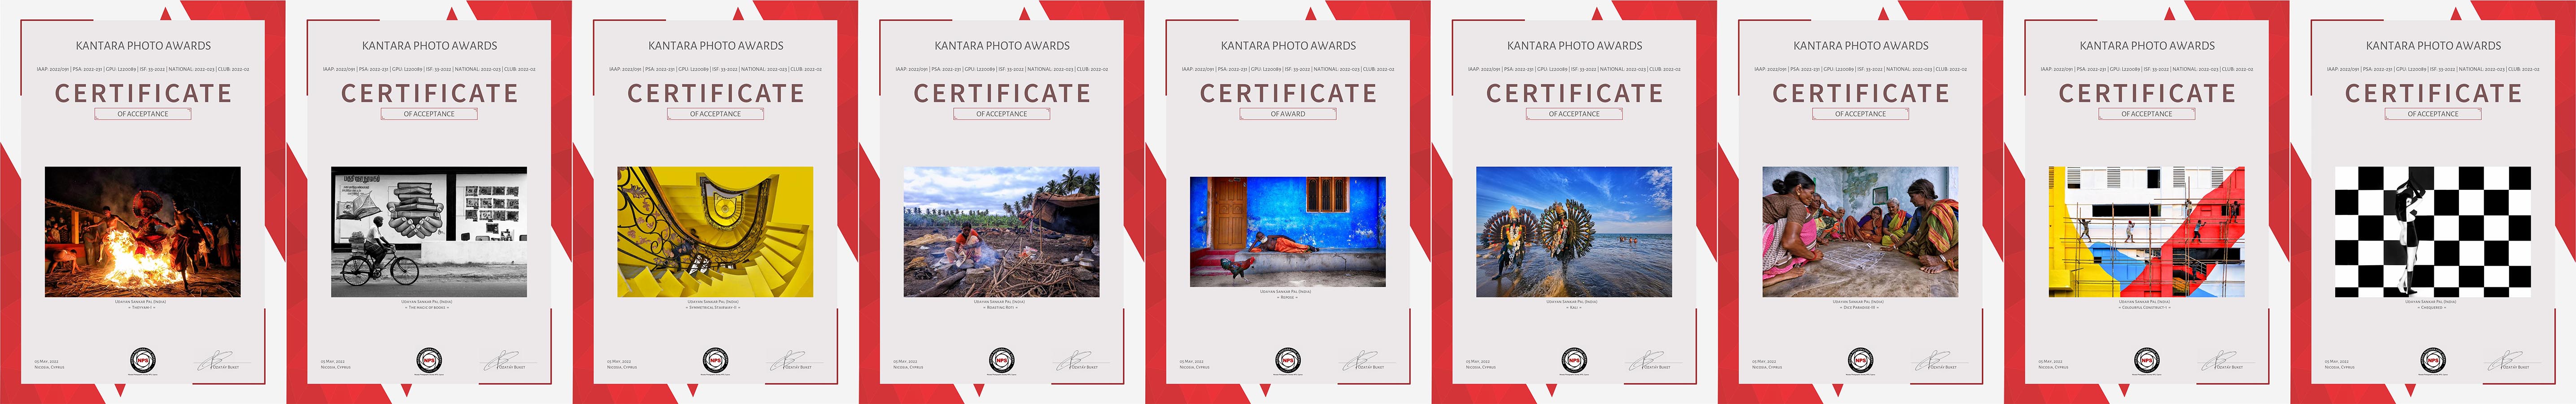 Kantara Photo Awards-2022